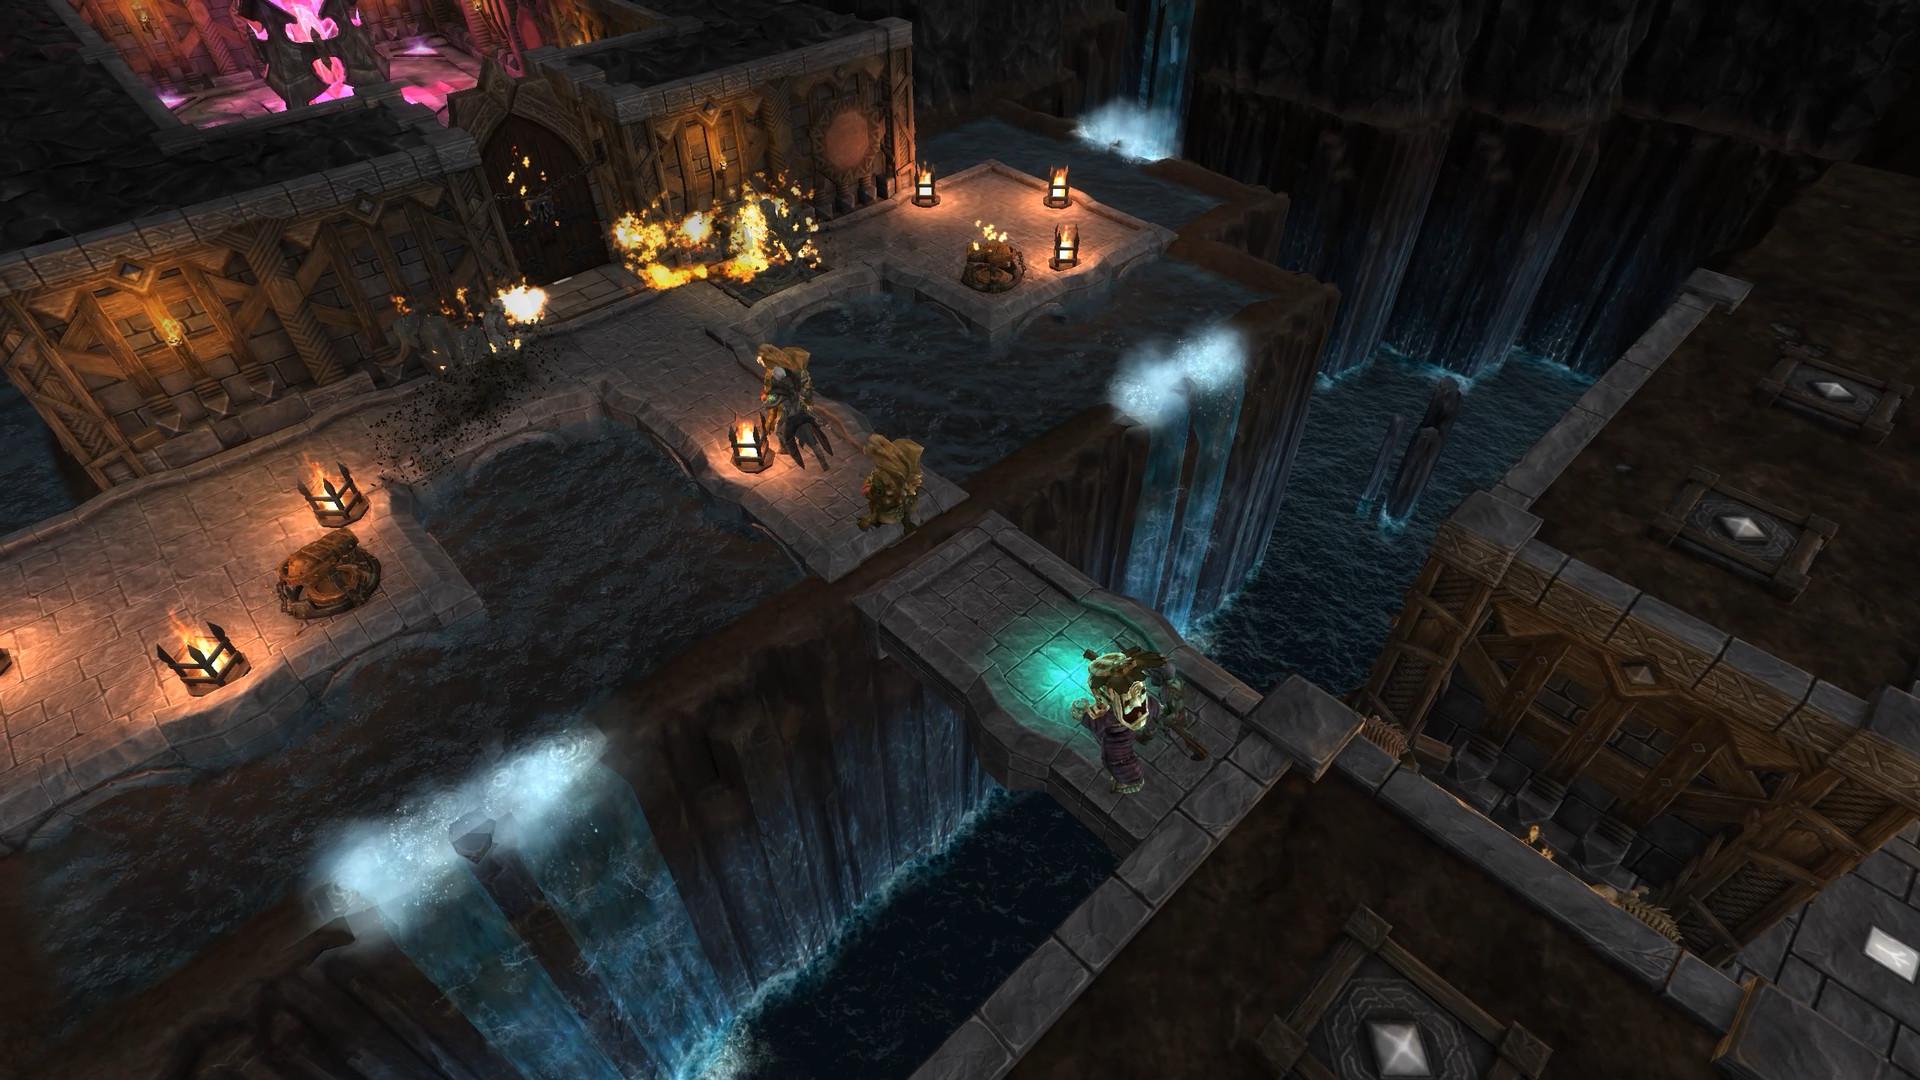 Screenshot №7 from game War for the Overworld